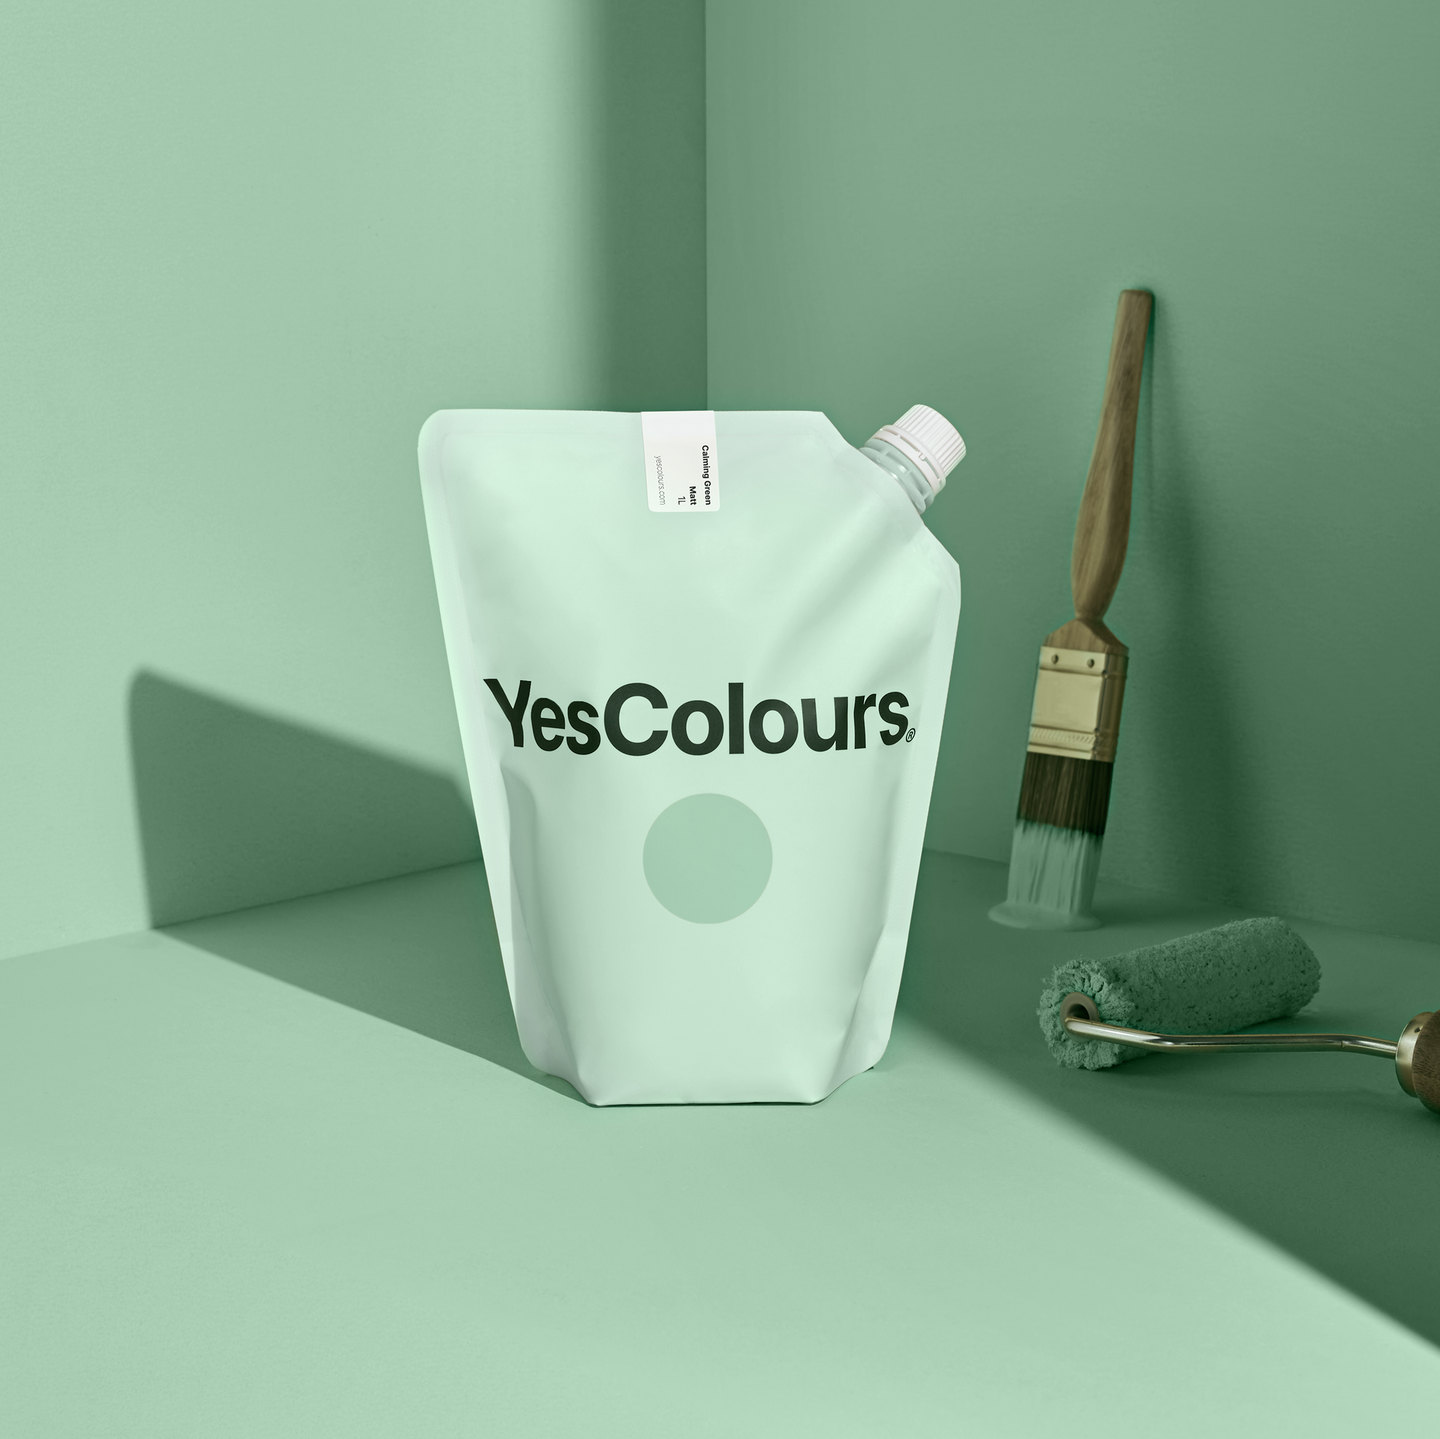 YesColours premium Calming Green matt emulsion paint